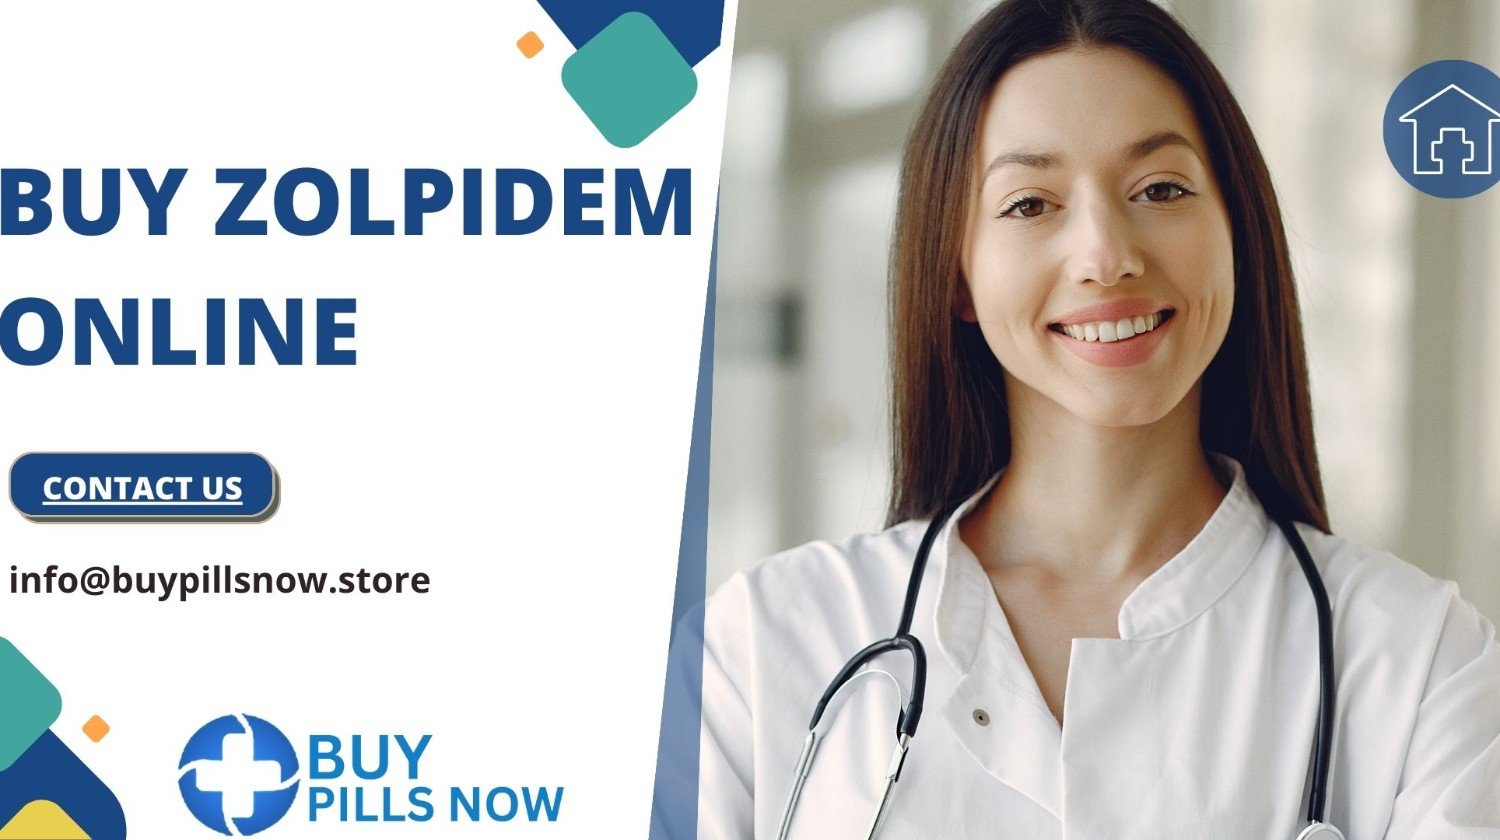 Buy Zolpidem 5mg Online @buypillsnow.store